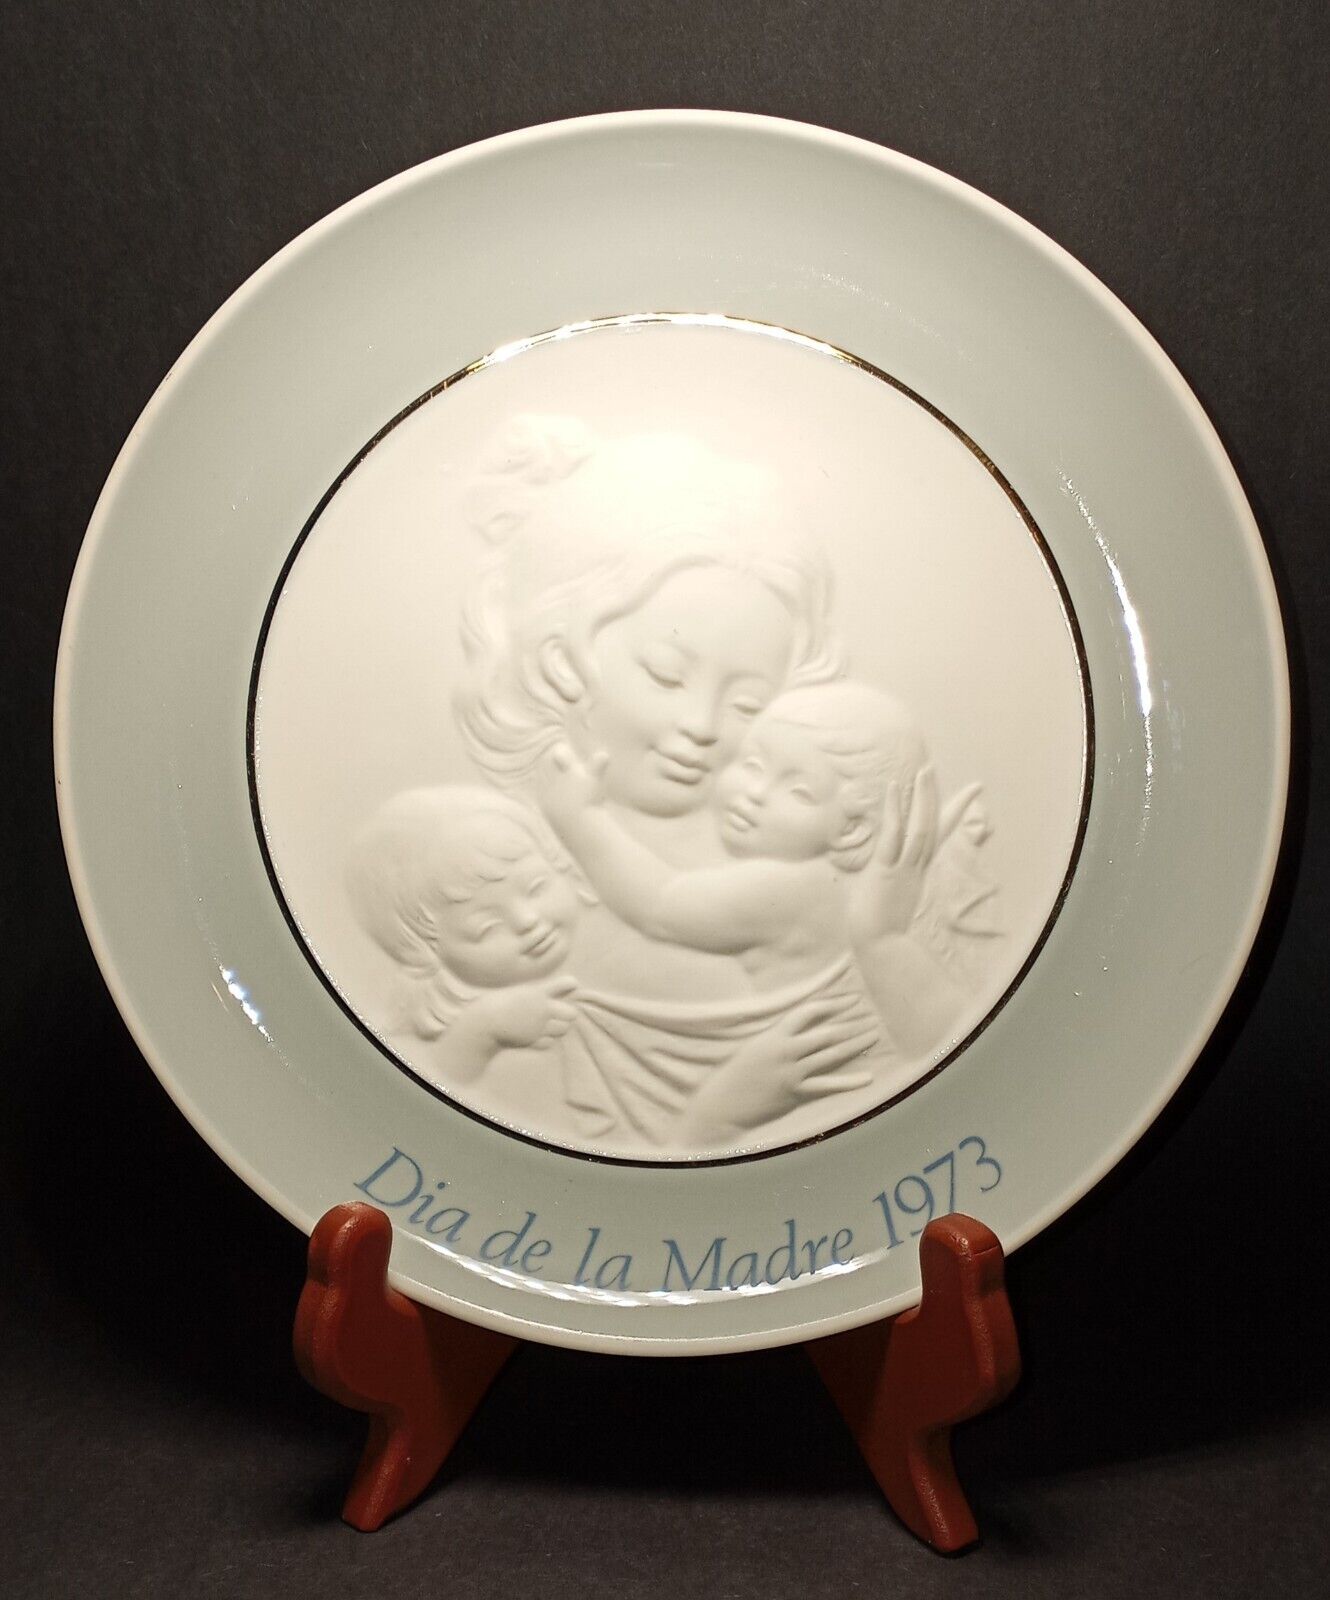 Vintage Lladro Spain Porcelain 1973 Mother’s Day Plate